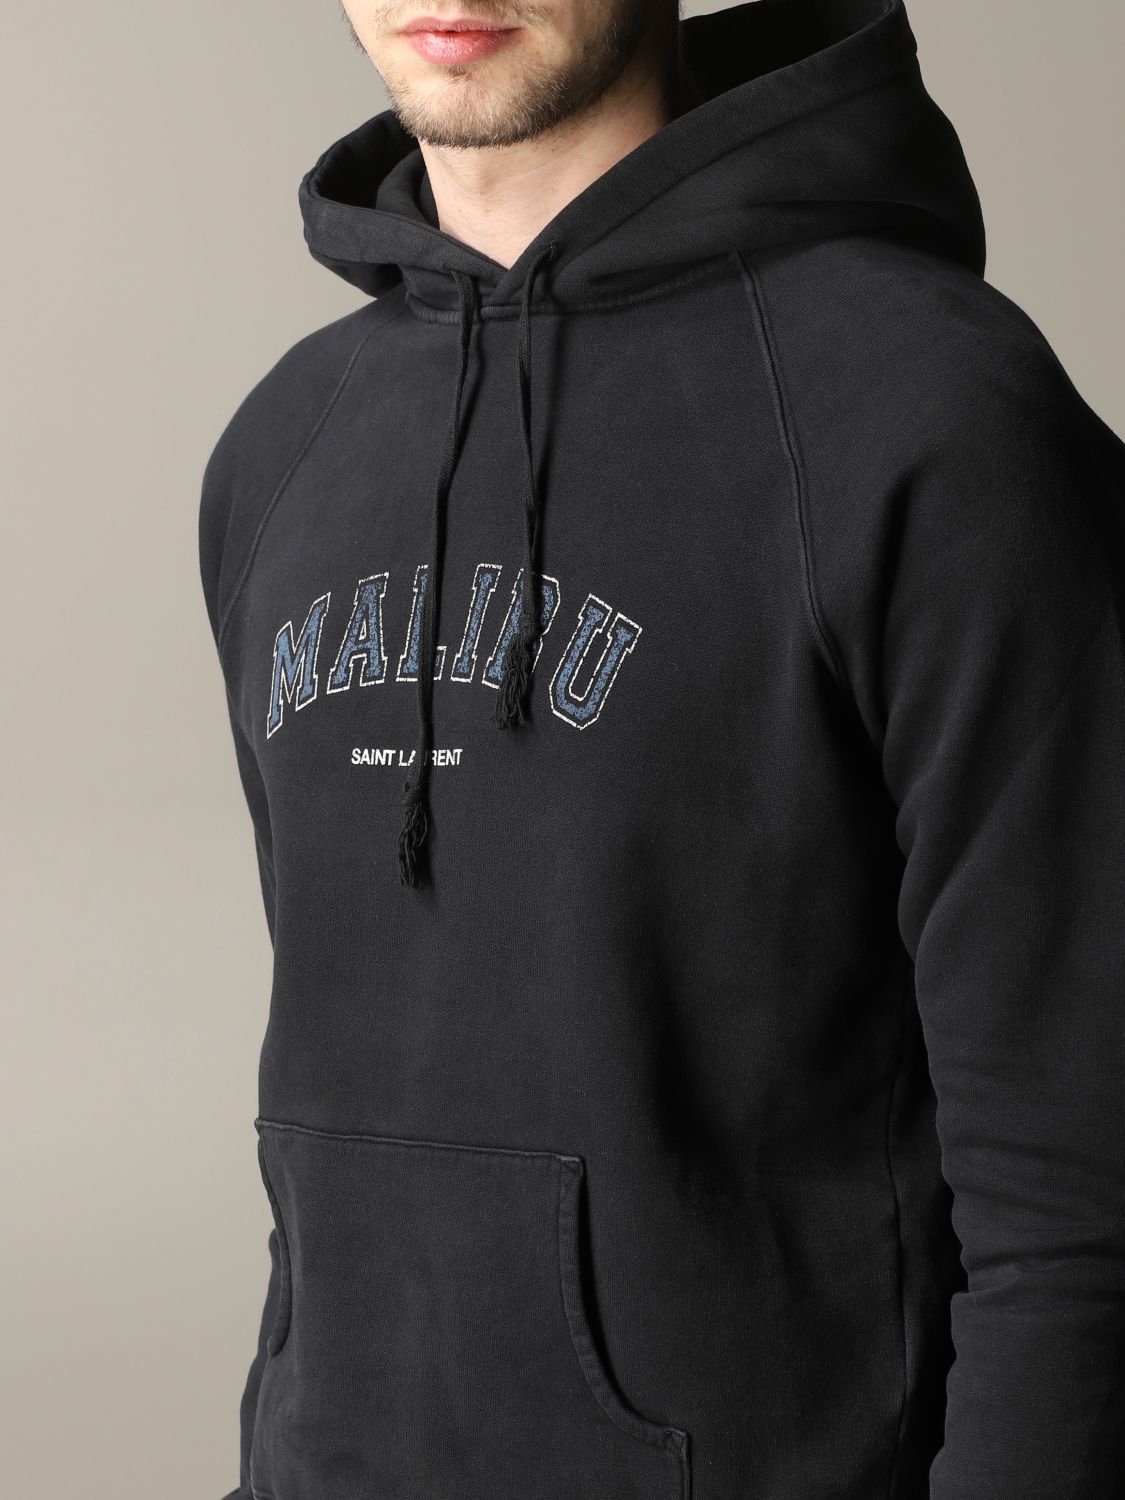 SAINT LAURENT: hoodie with Malibu print - Black | Saint Laurent ...